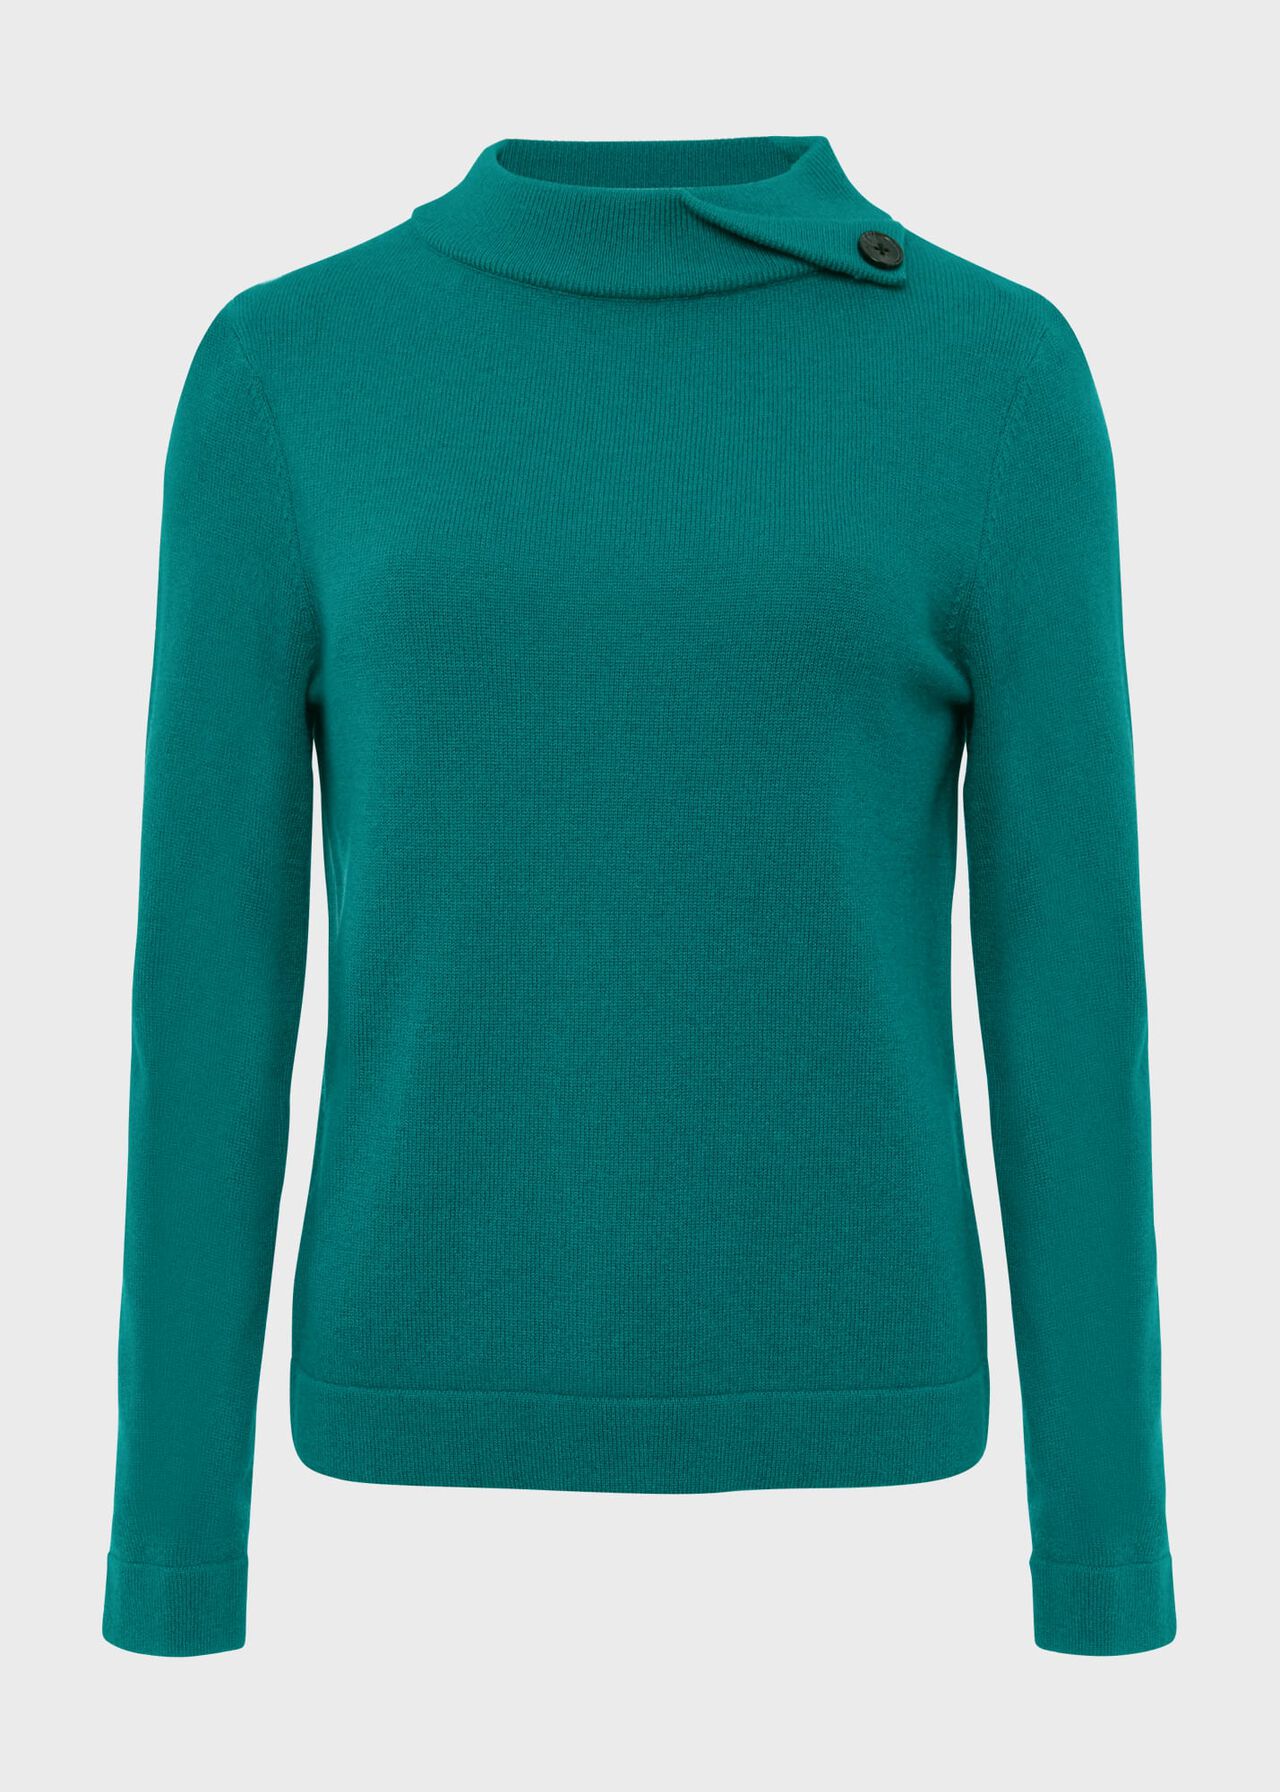 Talia Wool Cashmere Sweater, Ocean Green, hi-res